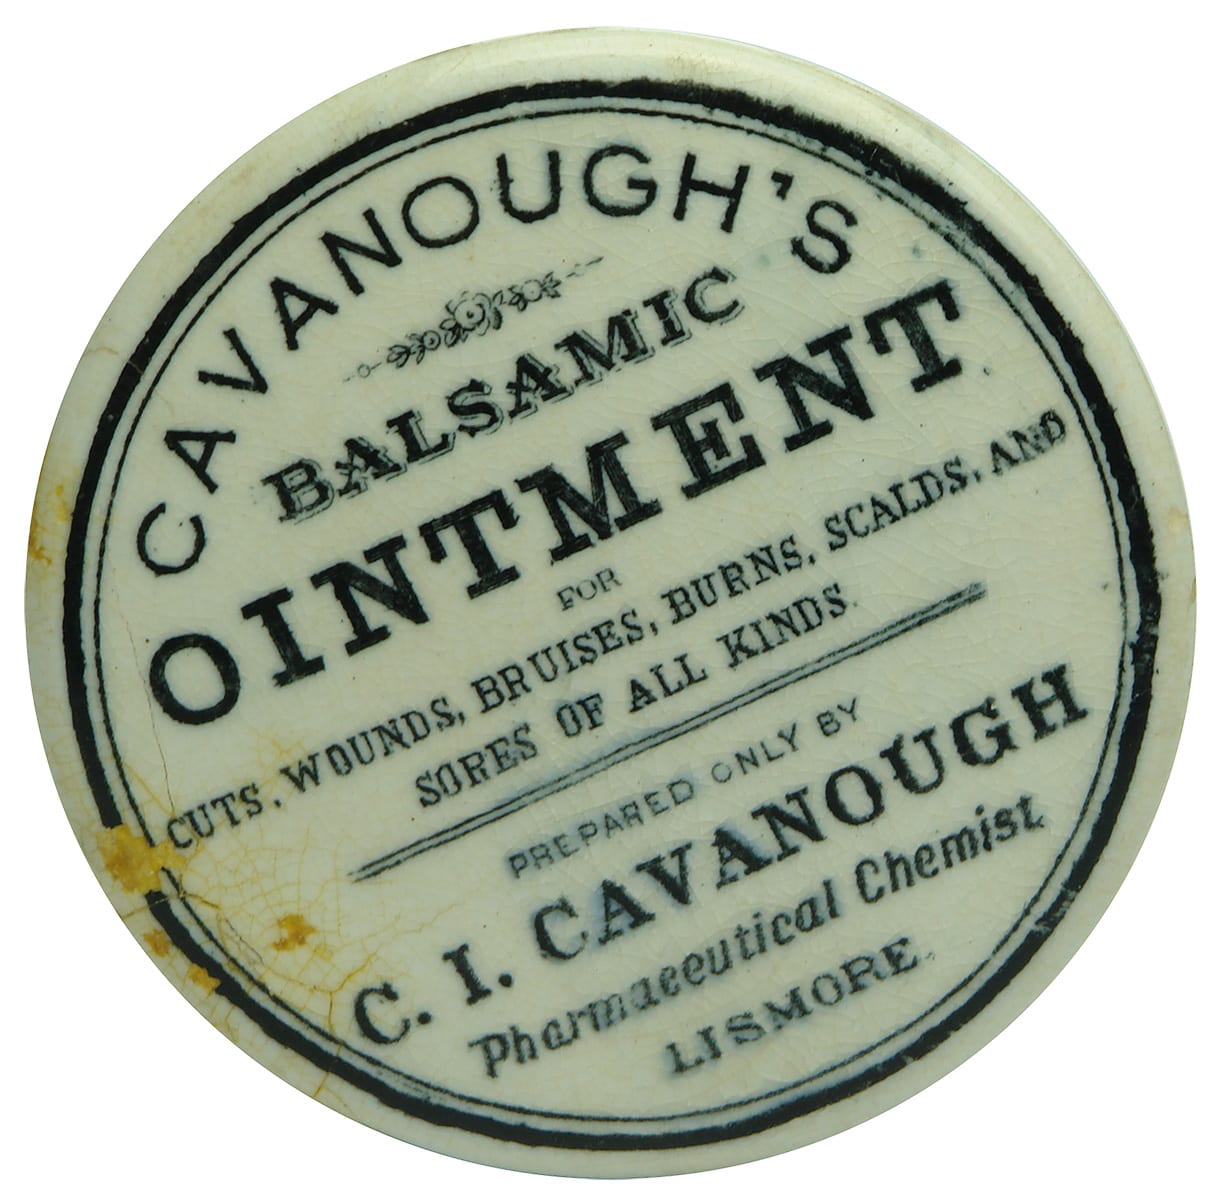 Cavanoughs Balsamic Ointment Lismore Pot Lid